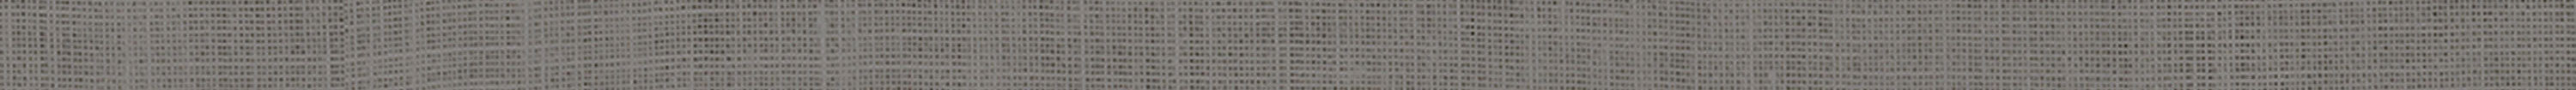 surface group international landmark soul textile grey merino matte deco tile design work border 0_8x24x9 mm for outdoor application manufactured by landmark